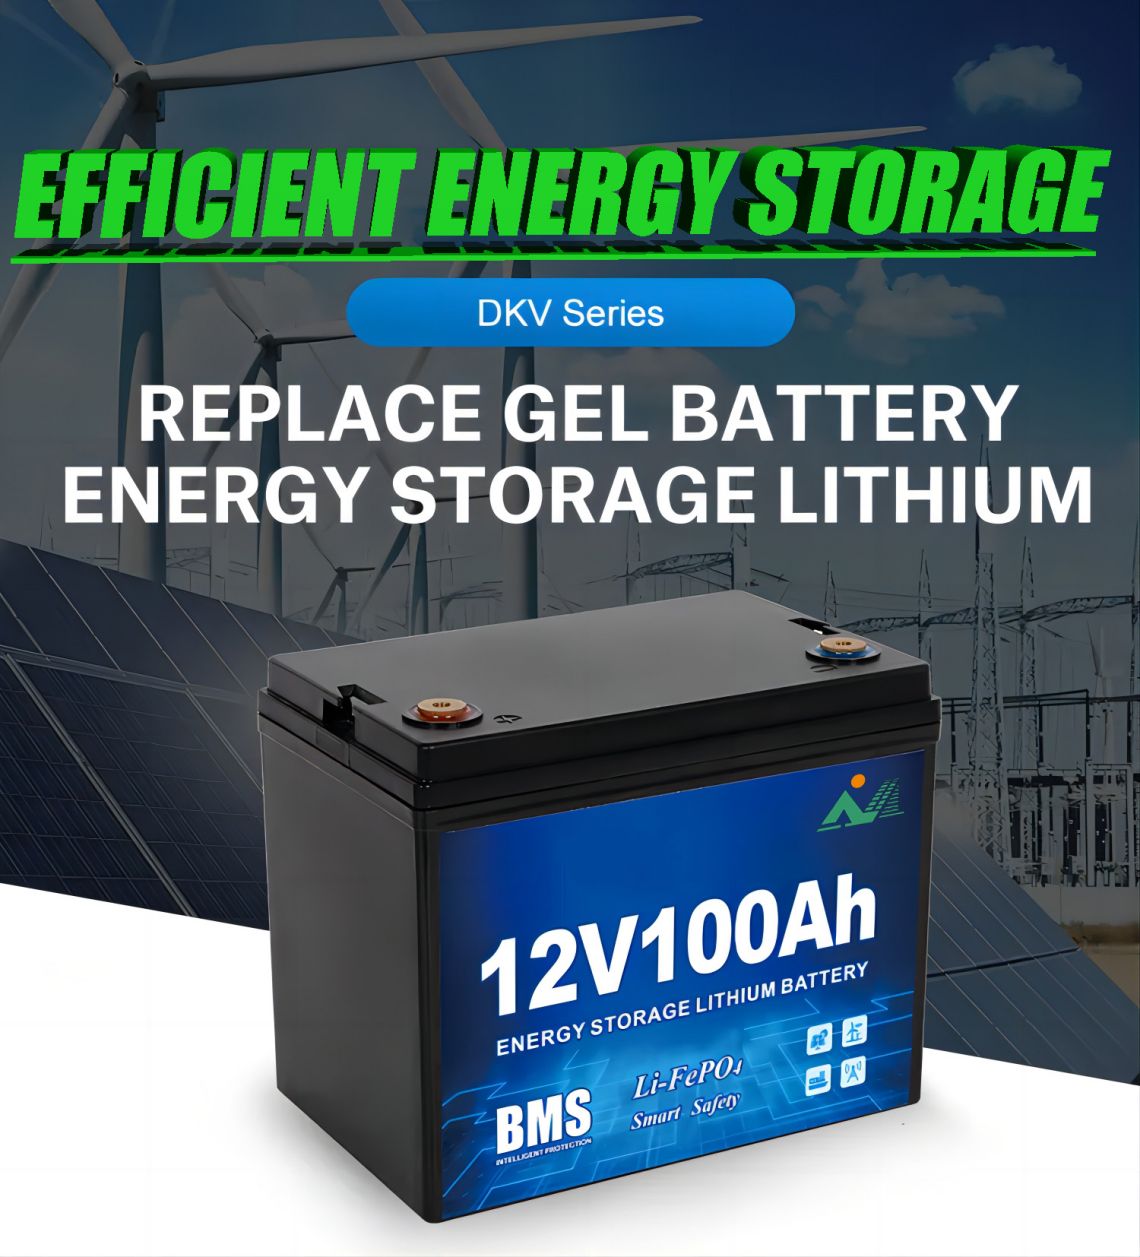 LFP Lithium Battery